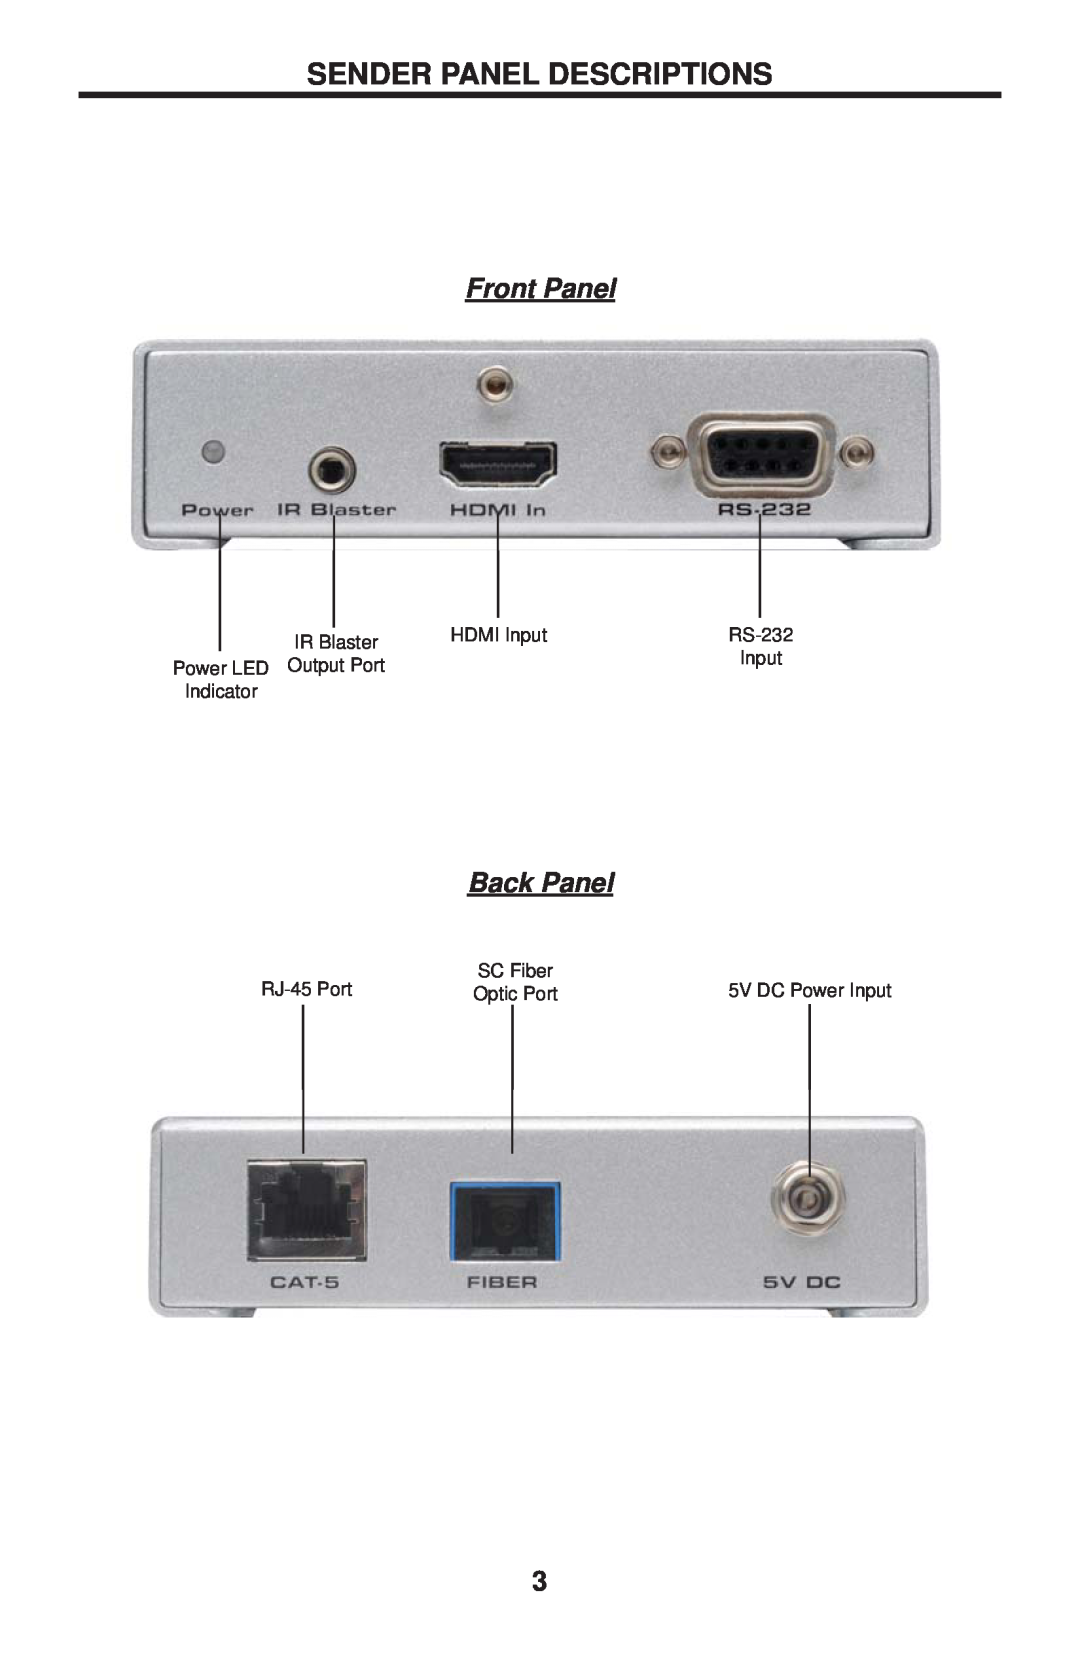 Gefen EXT-HDMI1.3IR-FO-141 Sender Panel Descriptions, Front Panel, Back Panel, HDMI Input, RS-232, IR Blaster, Indicator 